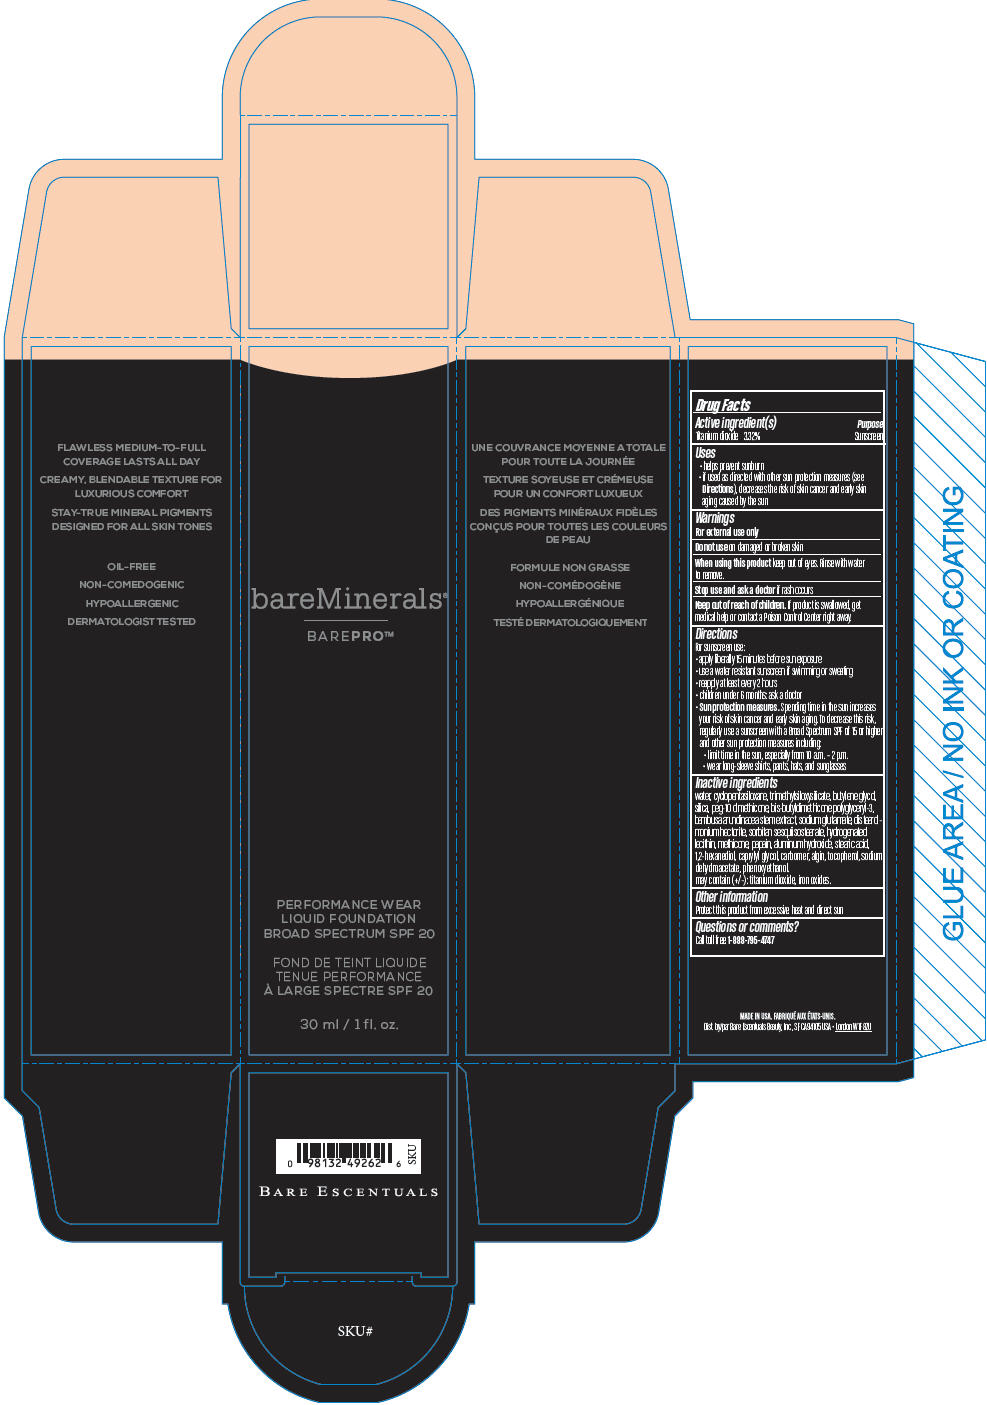 PRINCIPAL DISPLAY PANEL - 30 ml Bottle Carton - Clove 28